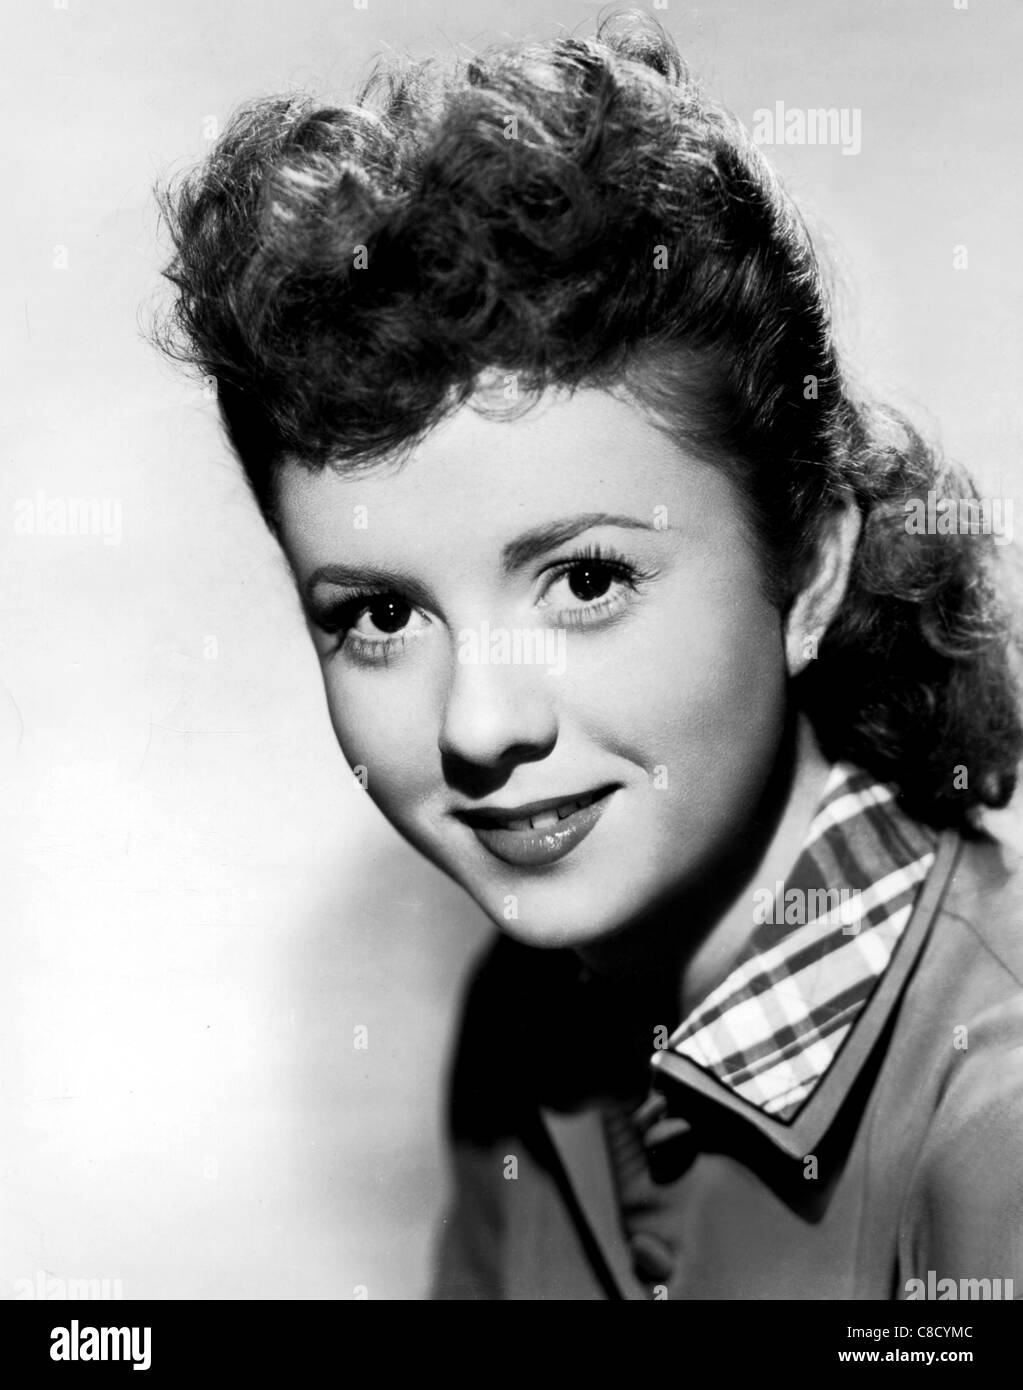 BETTY LYNN ACTRESS (1958 Stock Photo